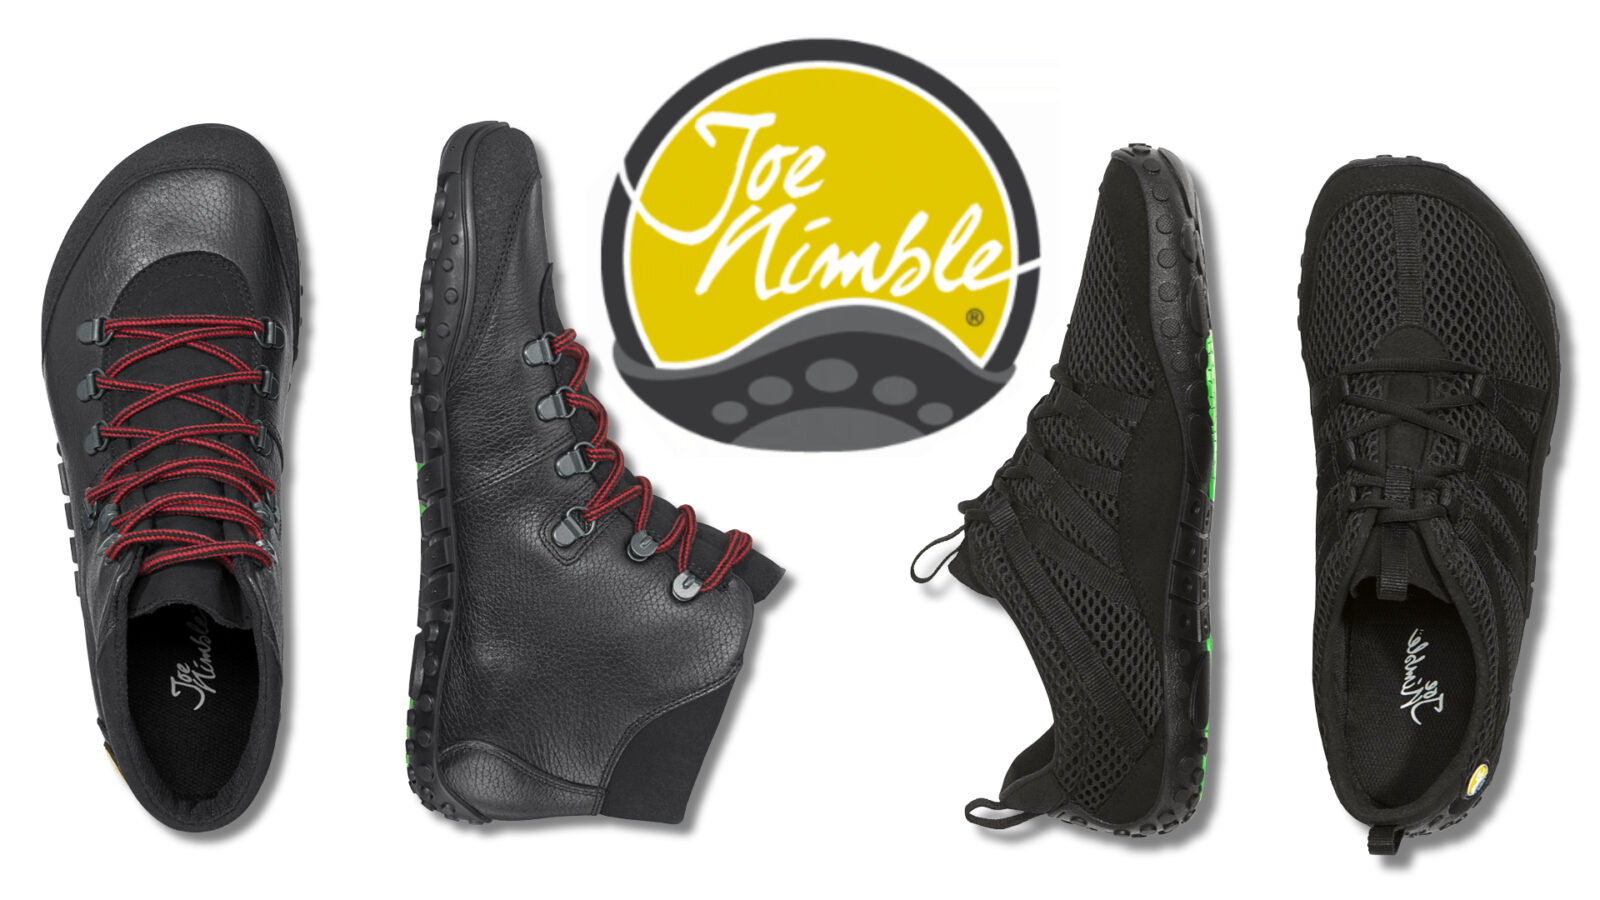 Barefoot shoes by Joe Nimble. WanderToes and NimbleToes.